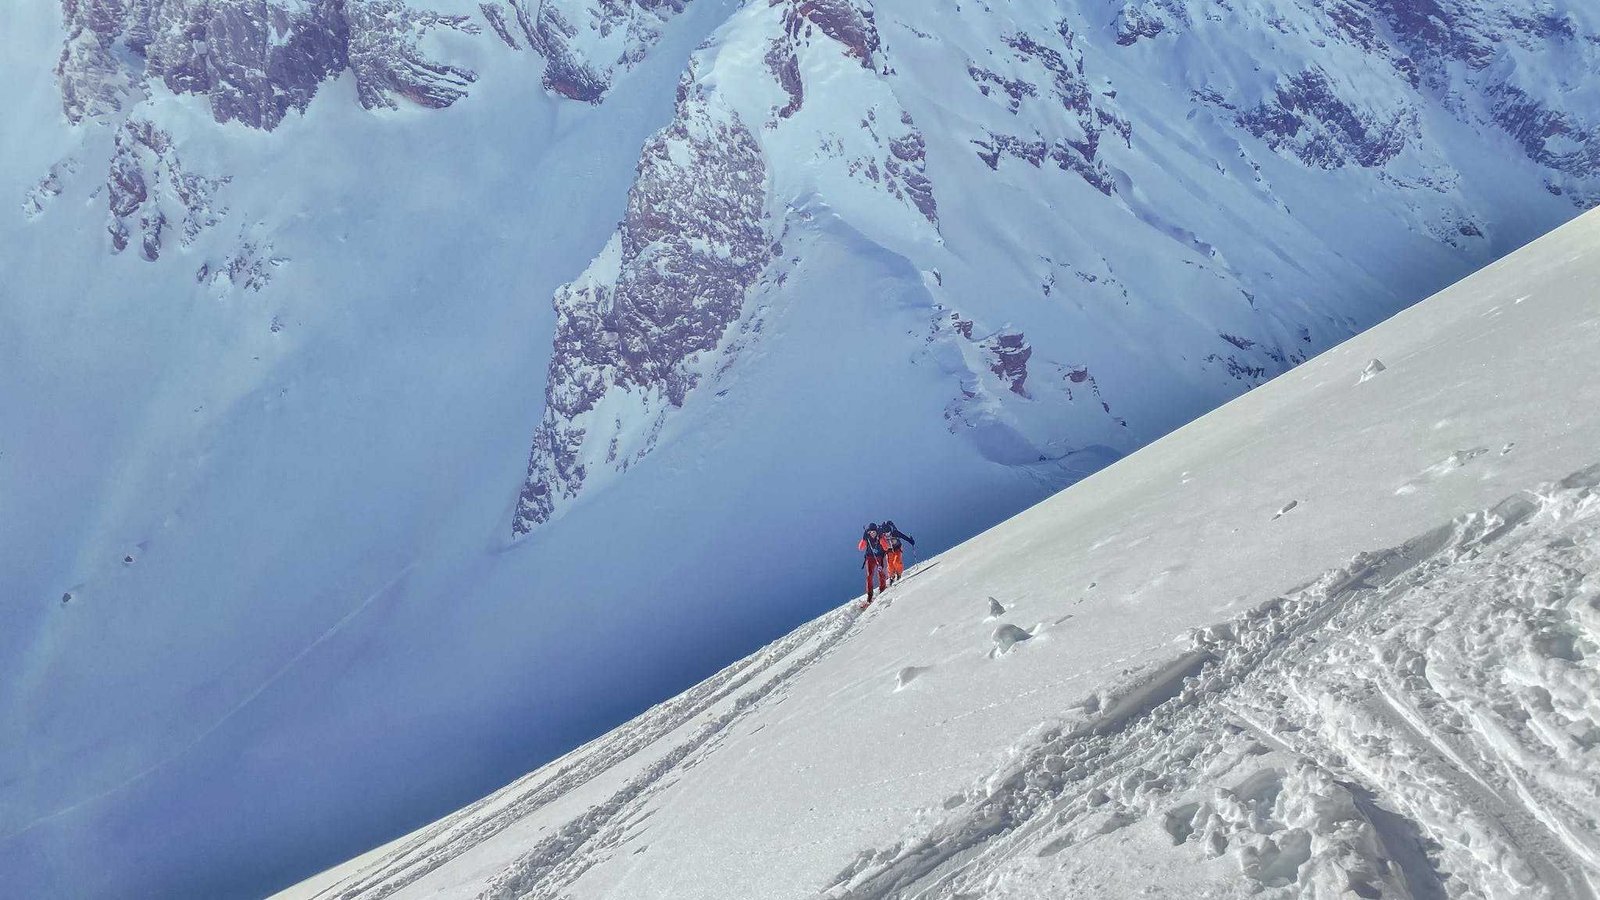 Faceless skiers riding towards snowy rough mountain